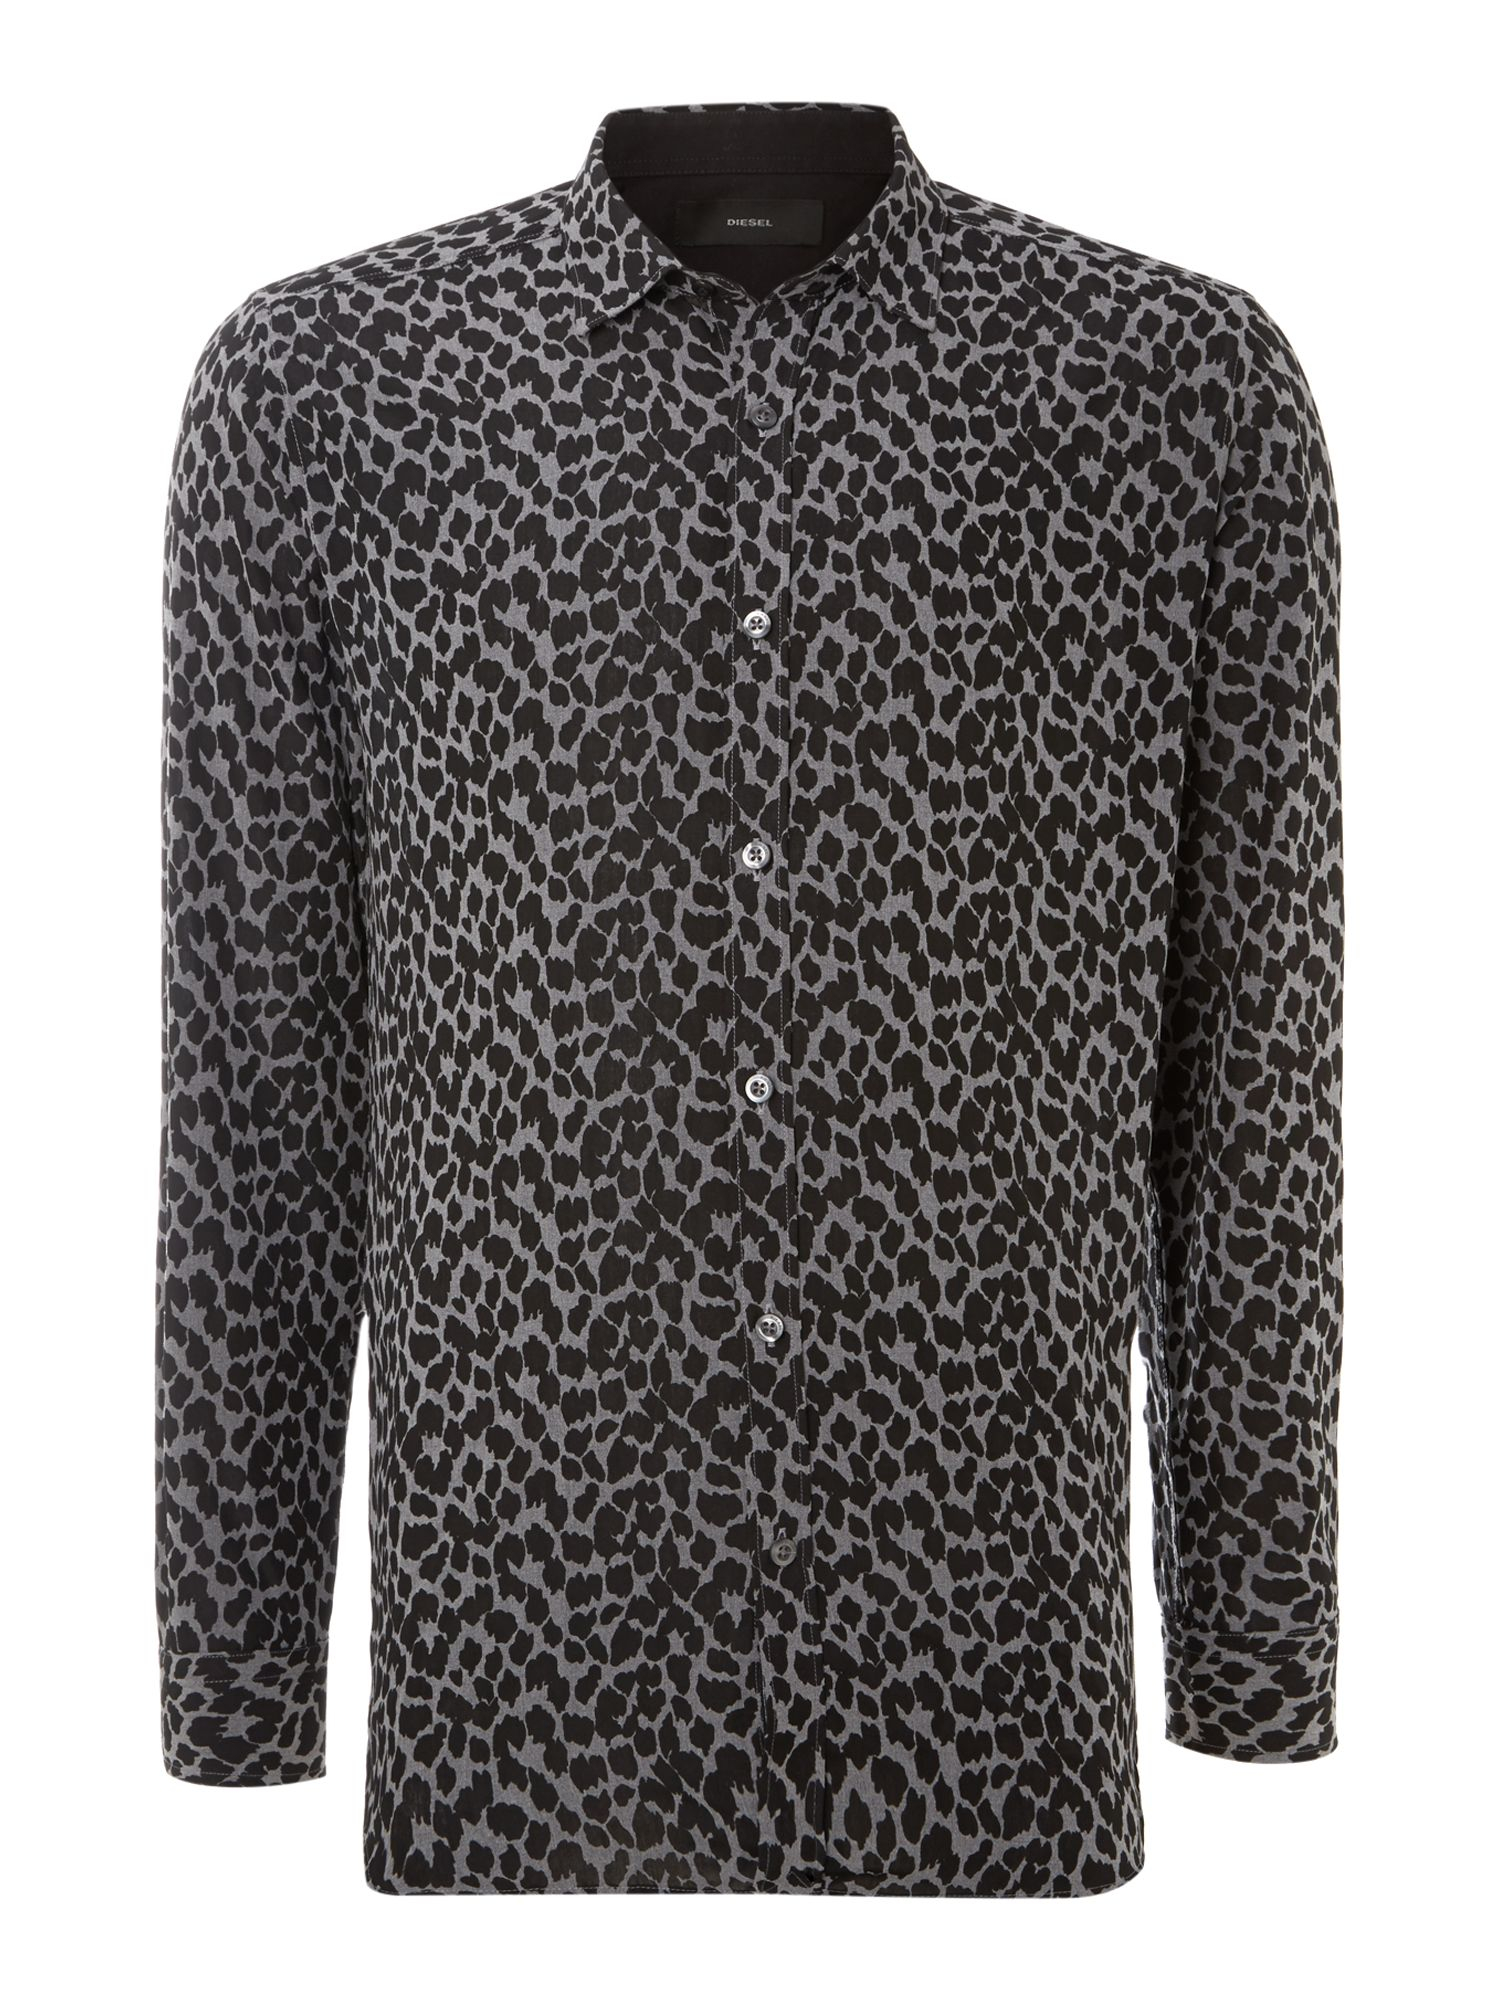 Diesel Leopard Print Long Sleeve Shirt in Gray for Men | Lyst